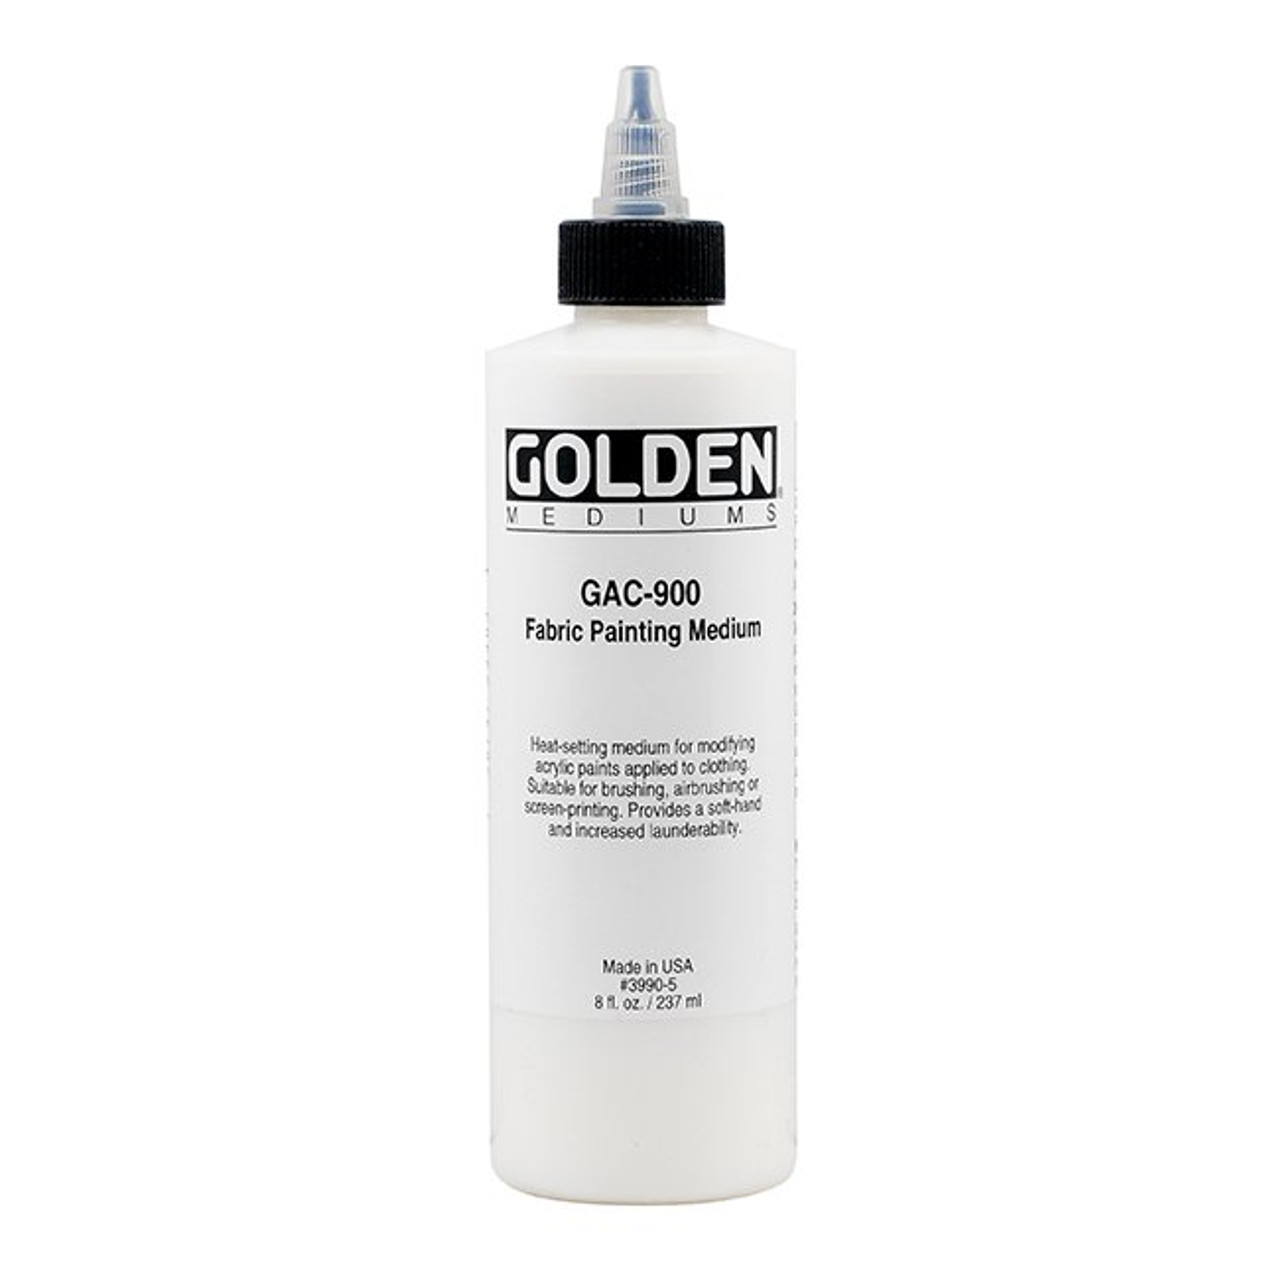 Golden OPEN Acrylics - Artist & Craftsman Supply